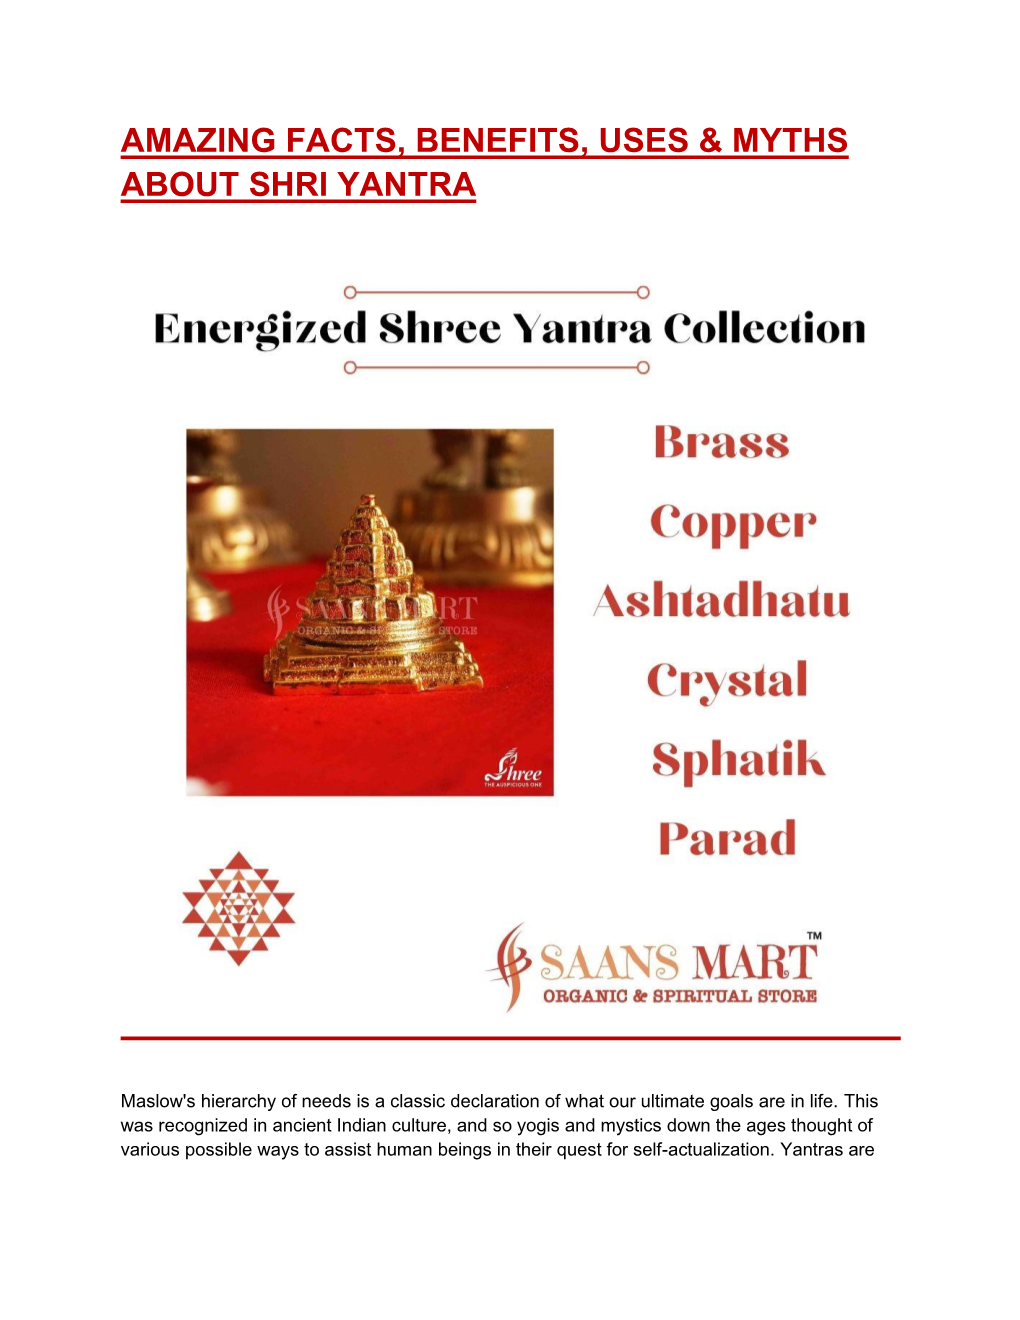 Amazing Facts, Benefits, Uses & Myths About Shri Yantra